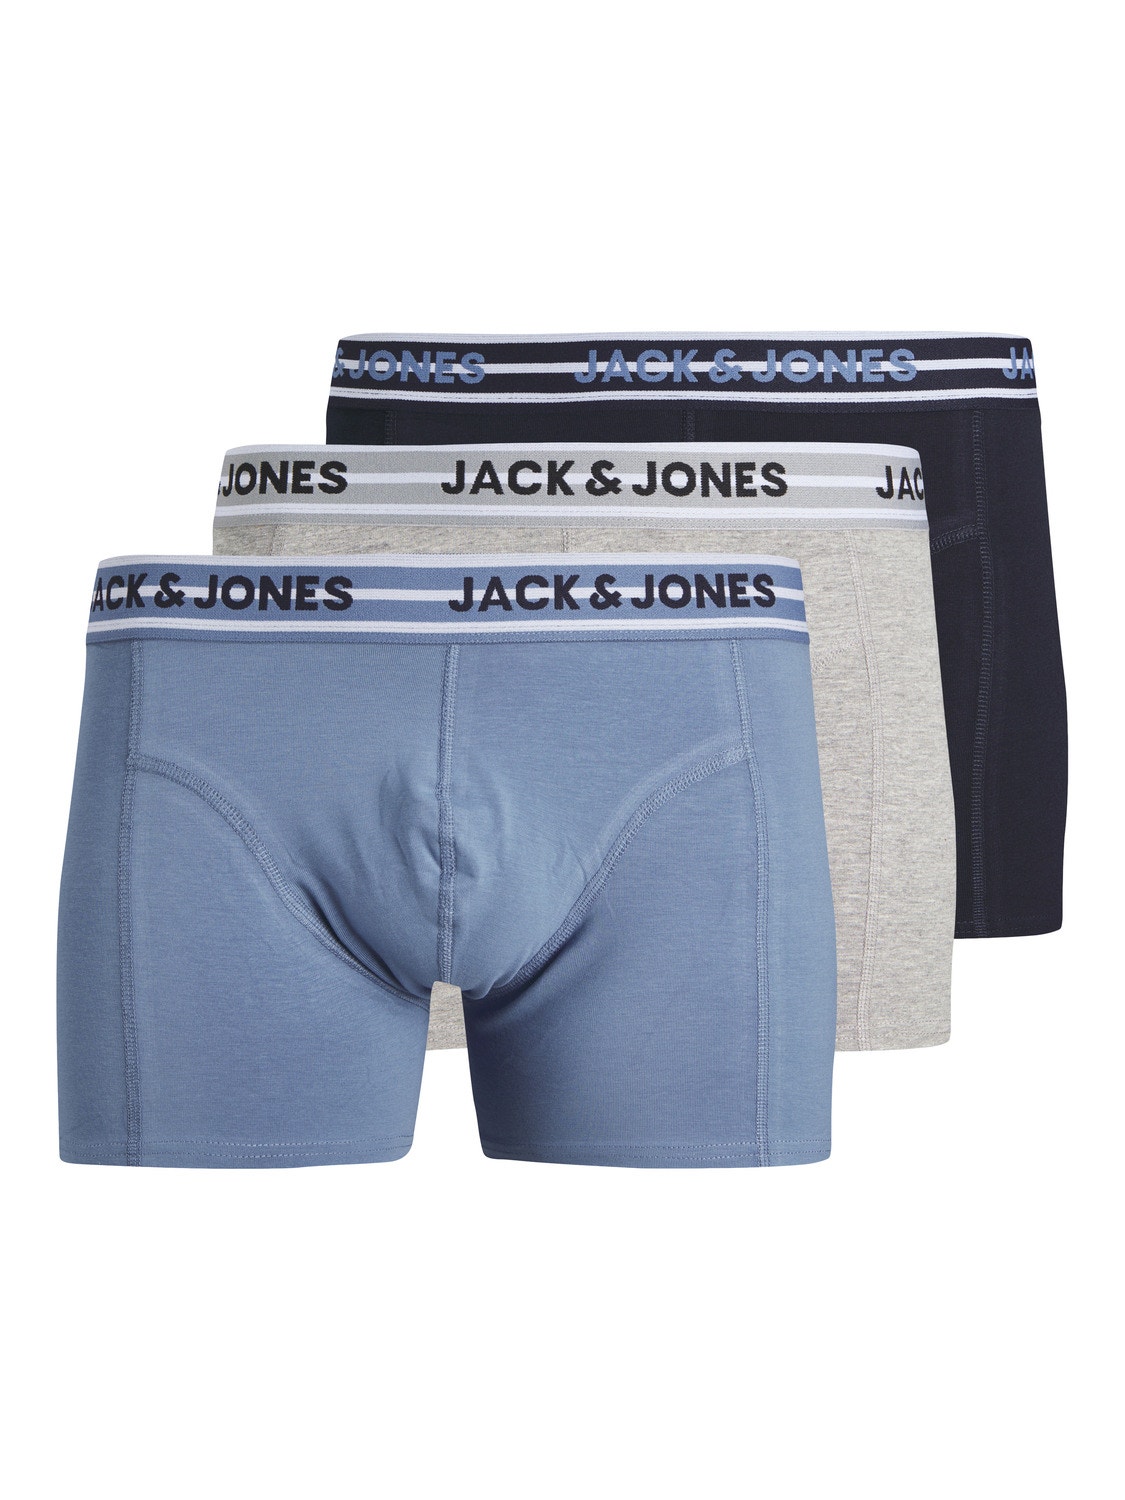 Jack & Jones 3-pack Boxershorts -Navy Blazer - 12251419